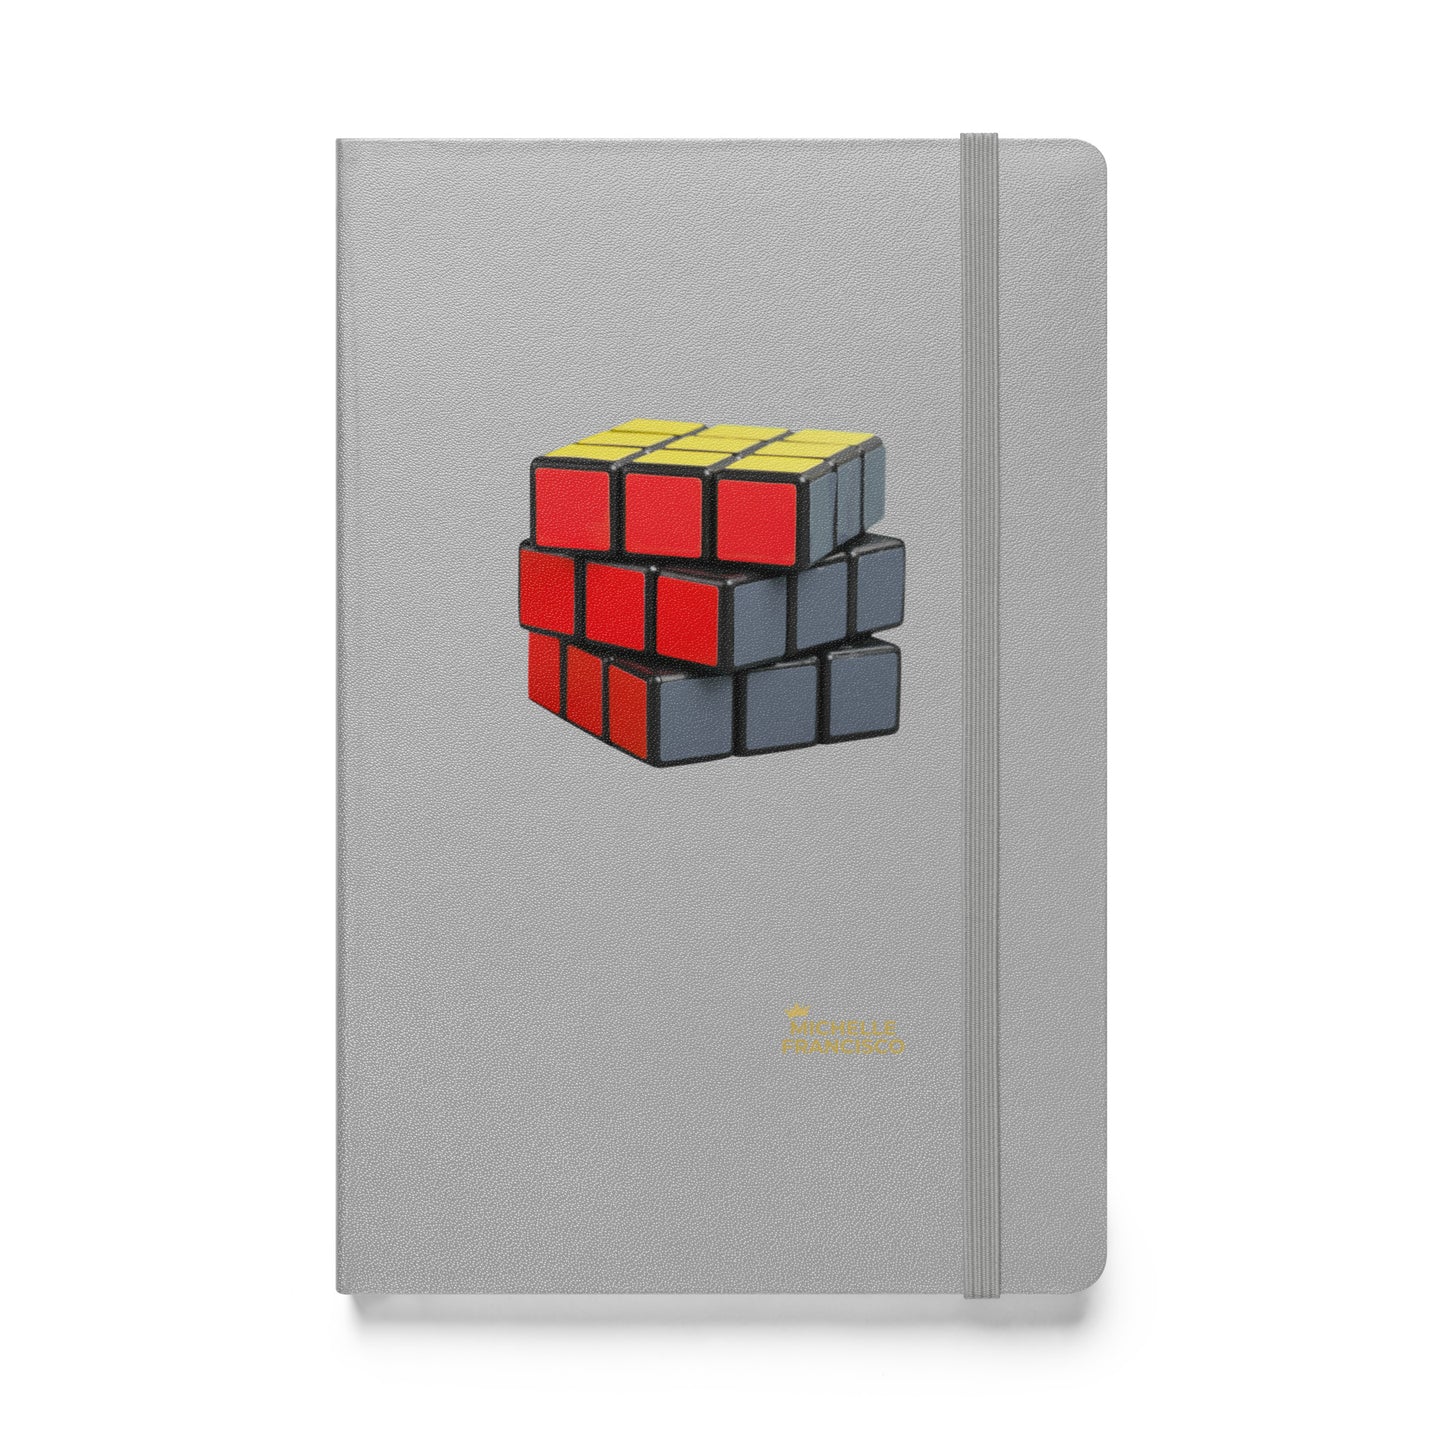 Rubik's Cube Hardcover Bound Notebook